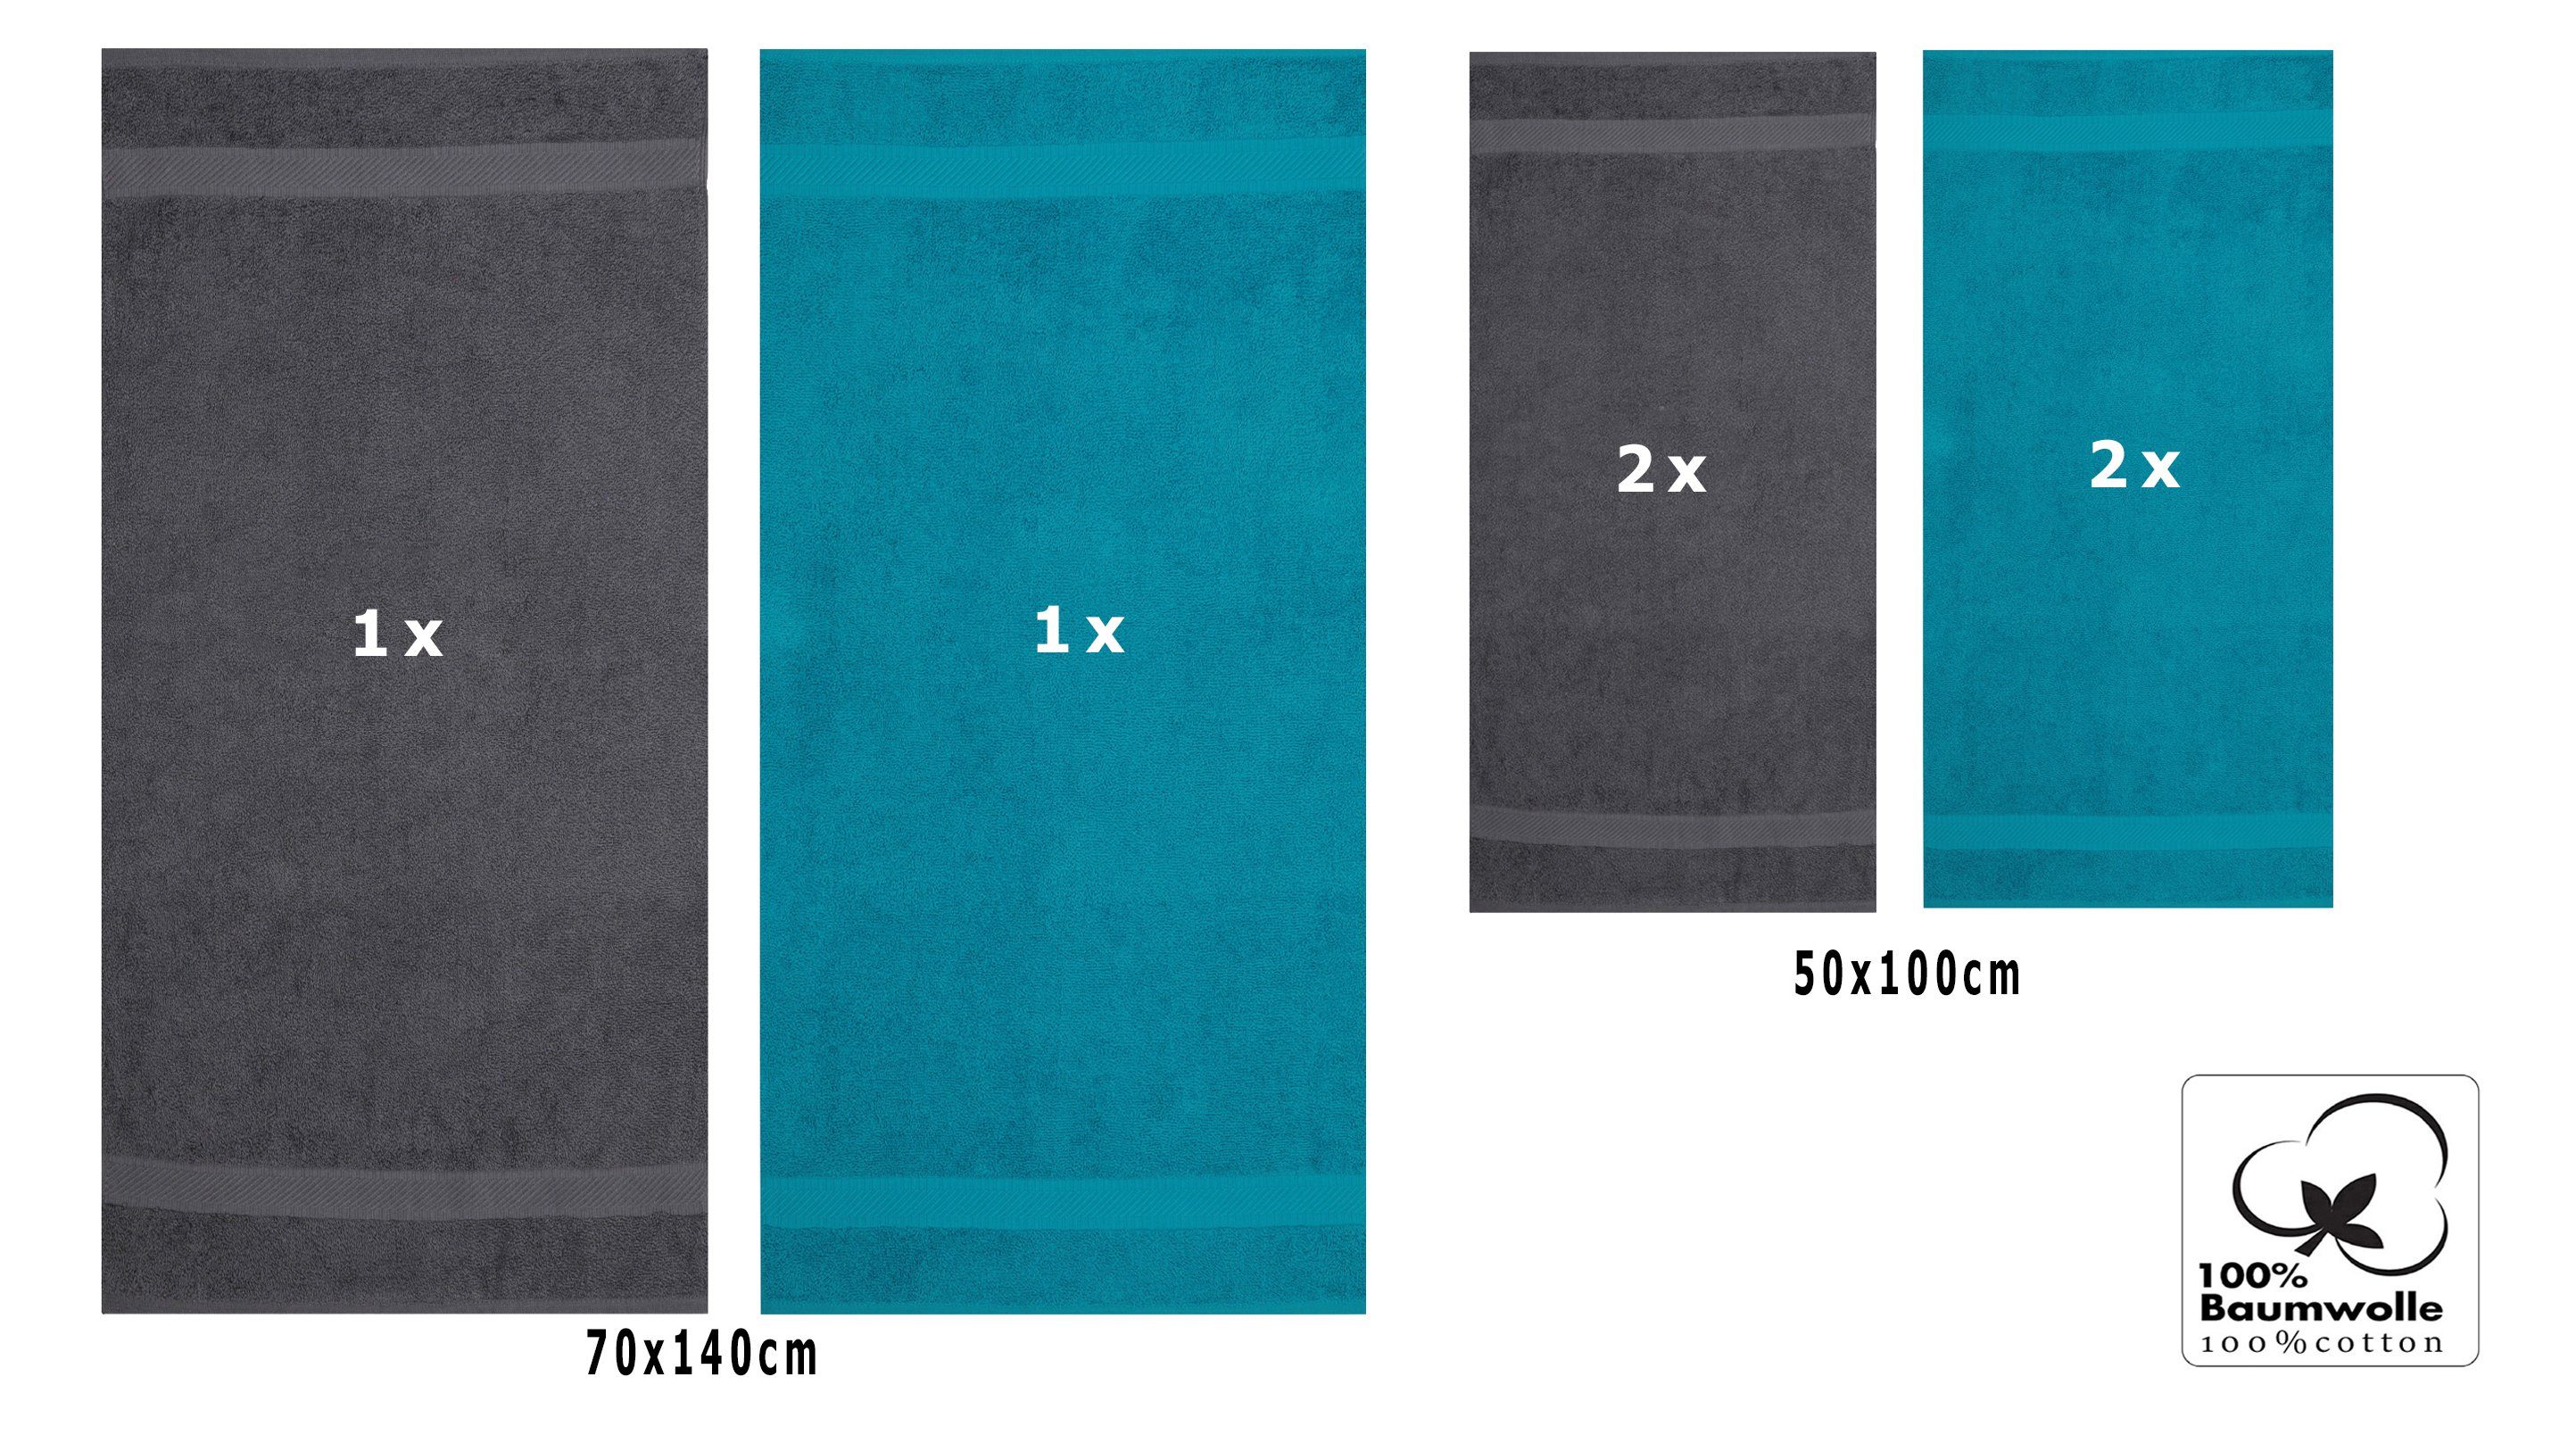 Betz Handtuch 6er 100% Liegetücher 70x140 4x 2x anthrazit/petrol cm Handtücher, Set Palermo Baumwolle